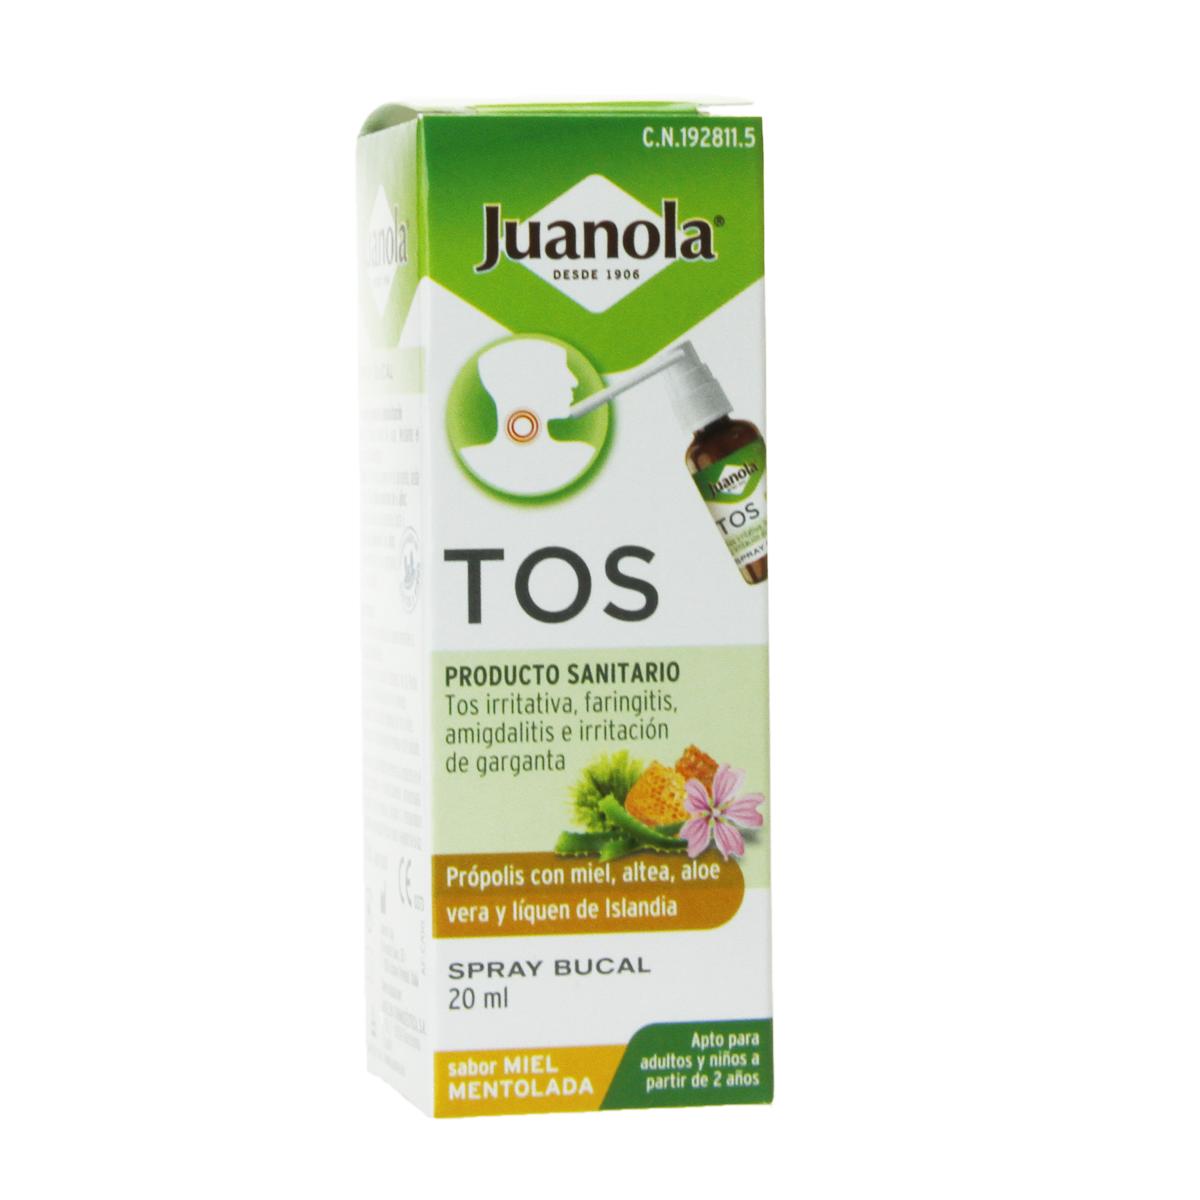 Juanola - Juanola tos spray 20 ml